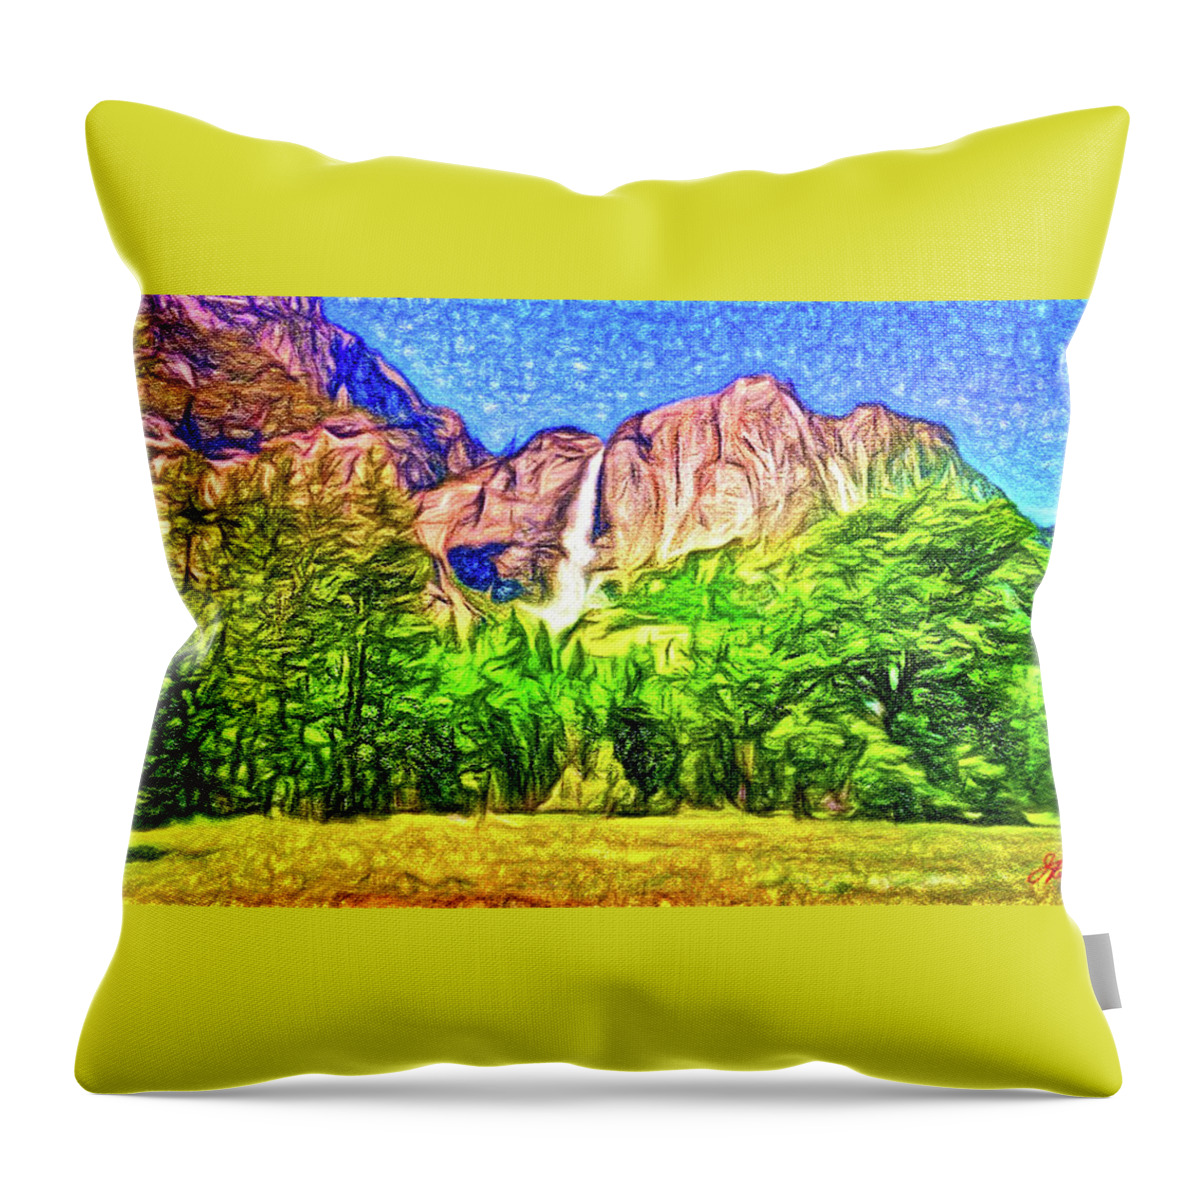 Yosemite National Park Throw Pillow featuring the painting Yosemite National Park by Joan Reese